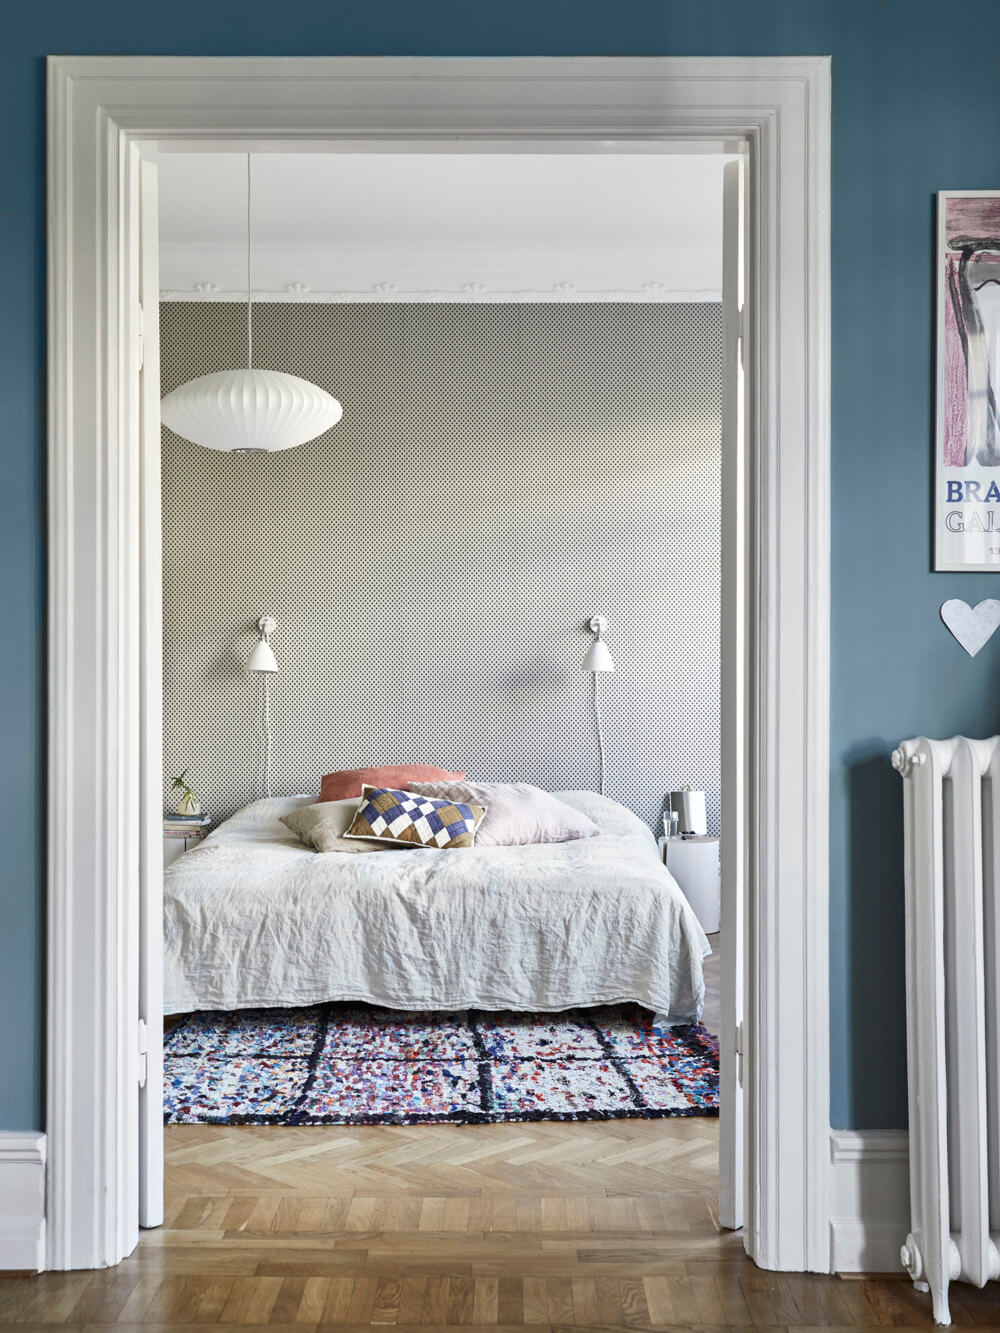 TheNordroom AScandinavianApartmentDecoratedinBlueandGreyTones7 A Scandinavian Apartment Decorated in Blue and Grey Tones